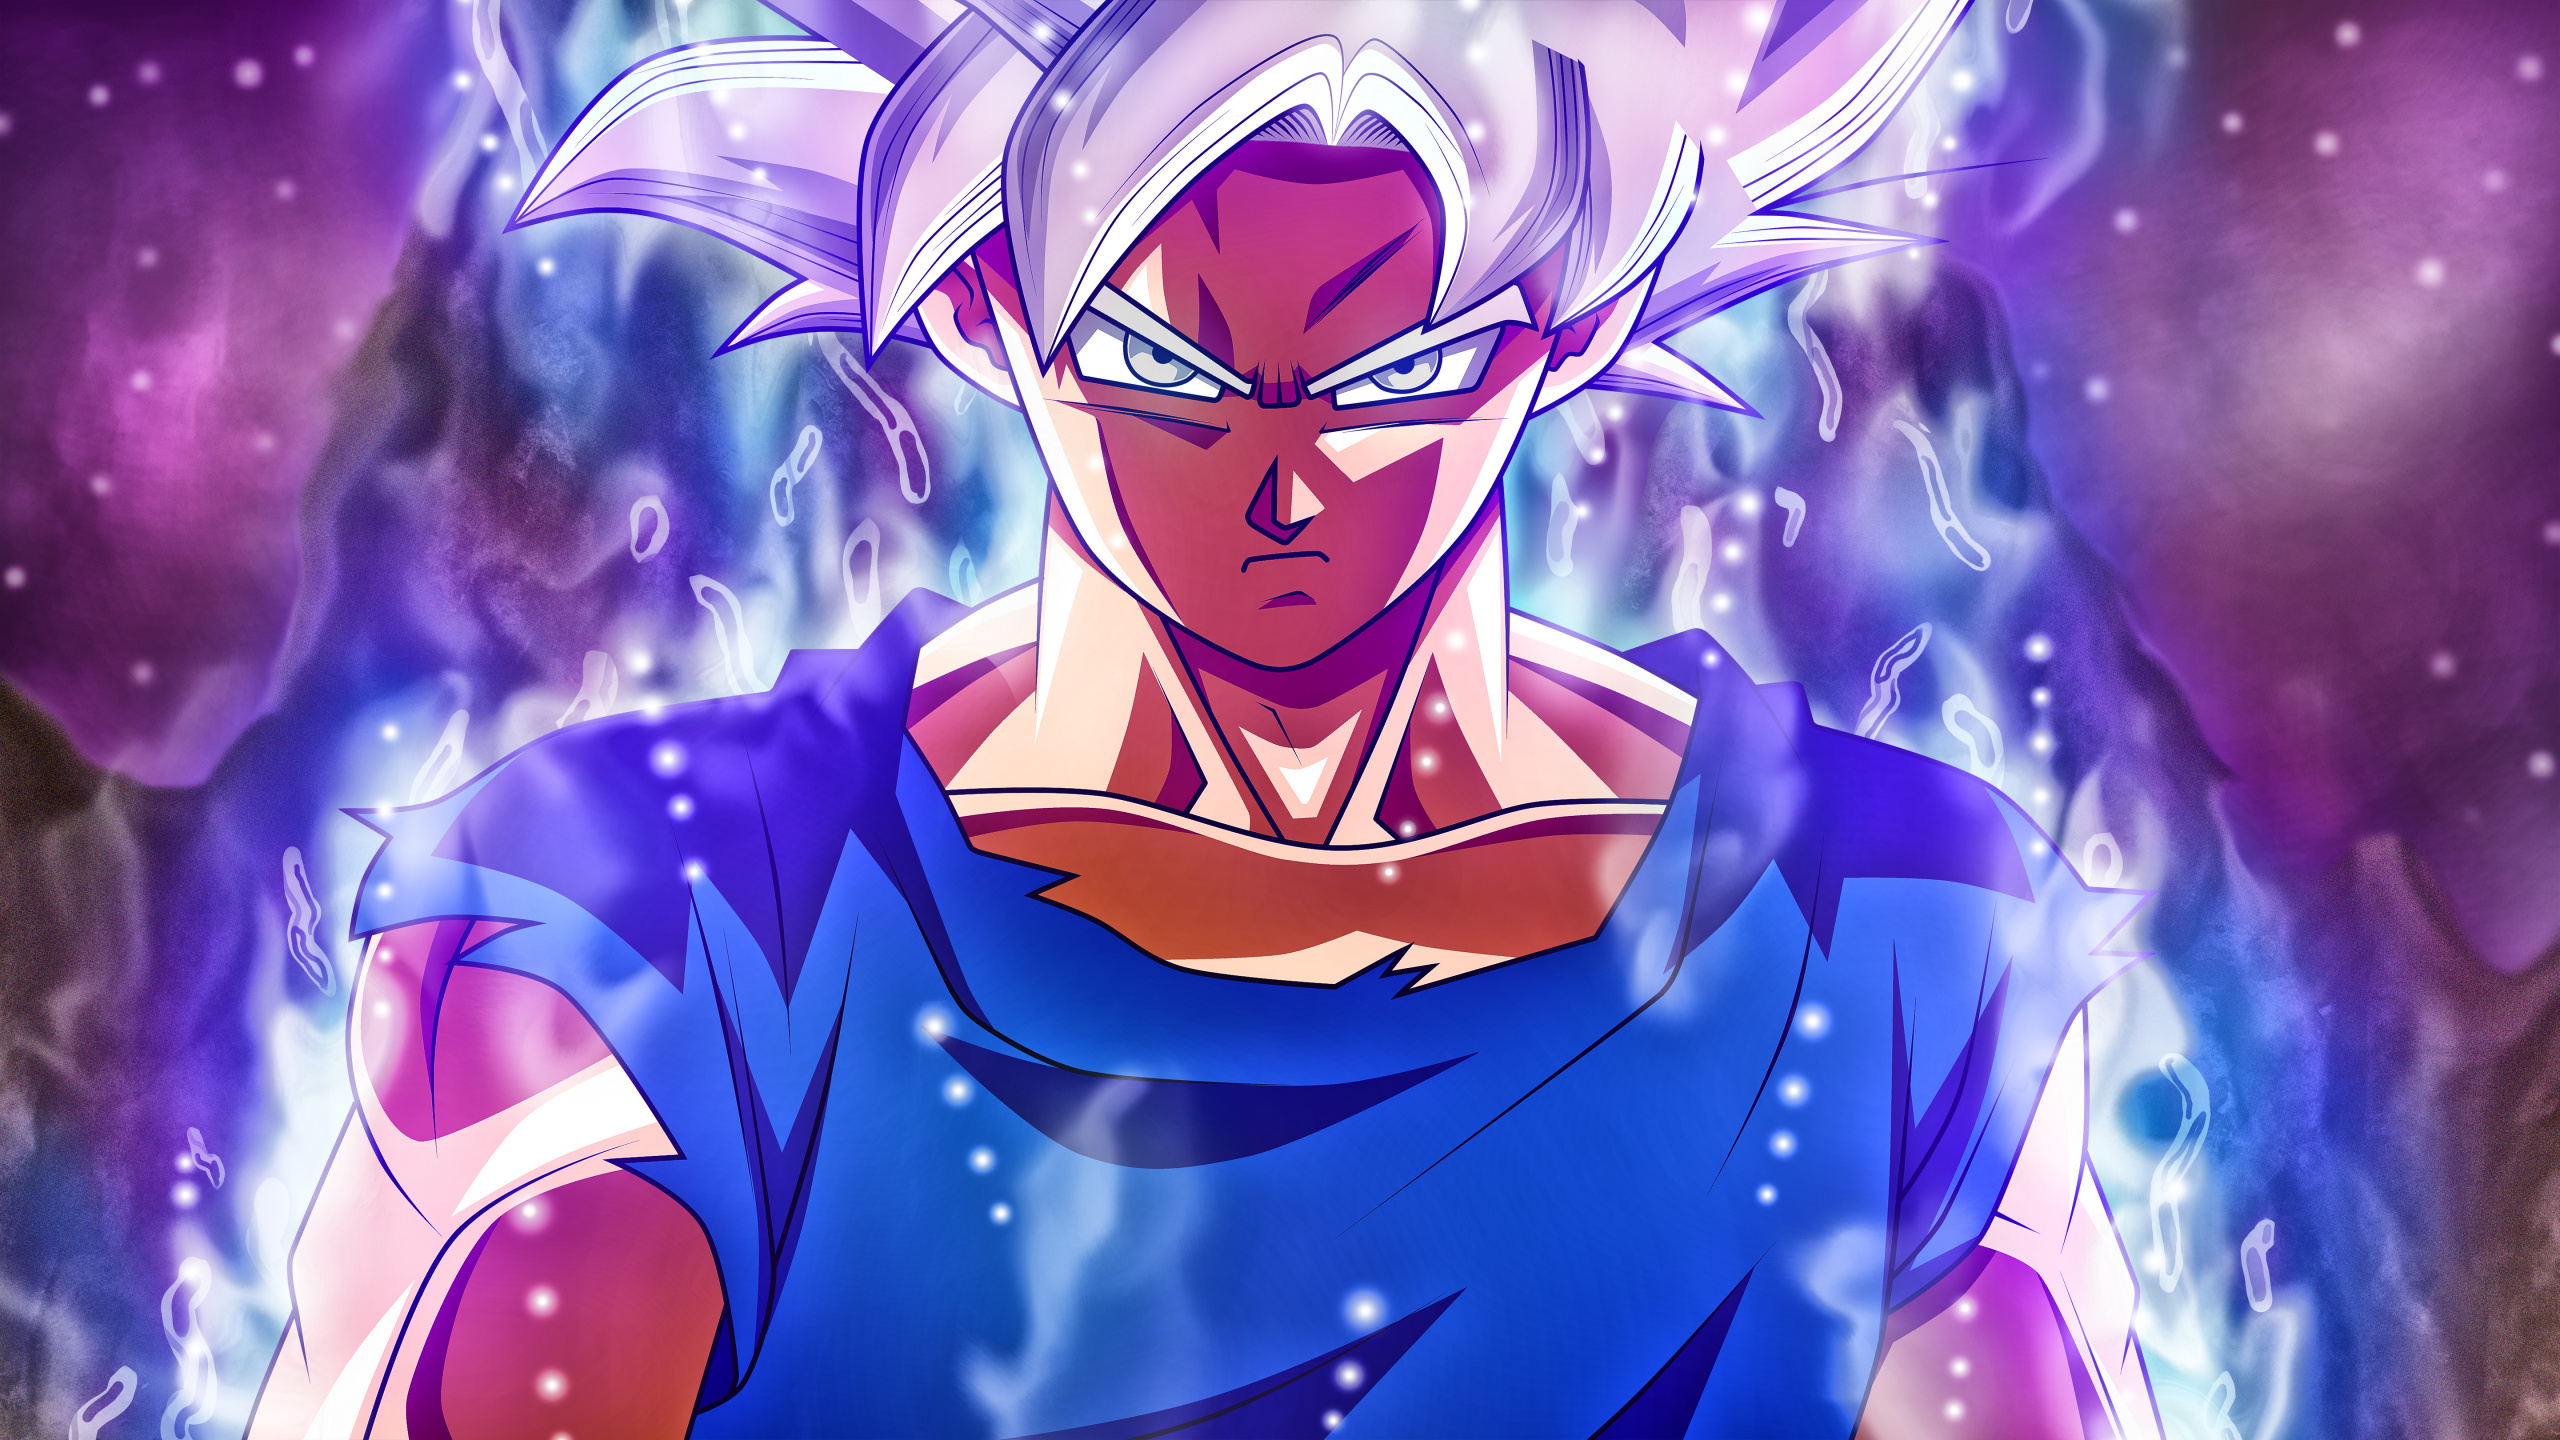 Personaje de Anime Masculino de Pelo Azul. Wallpaper in 2560x1440 Resolution